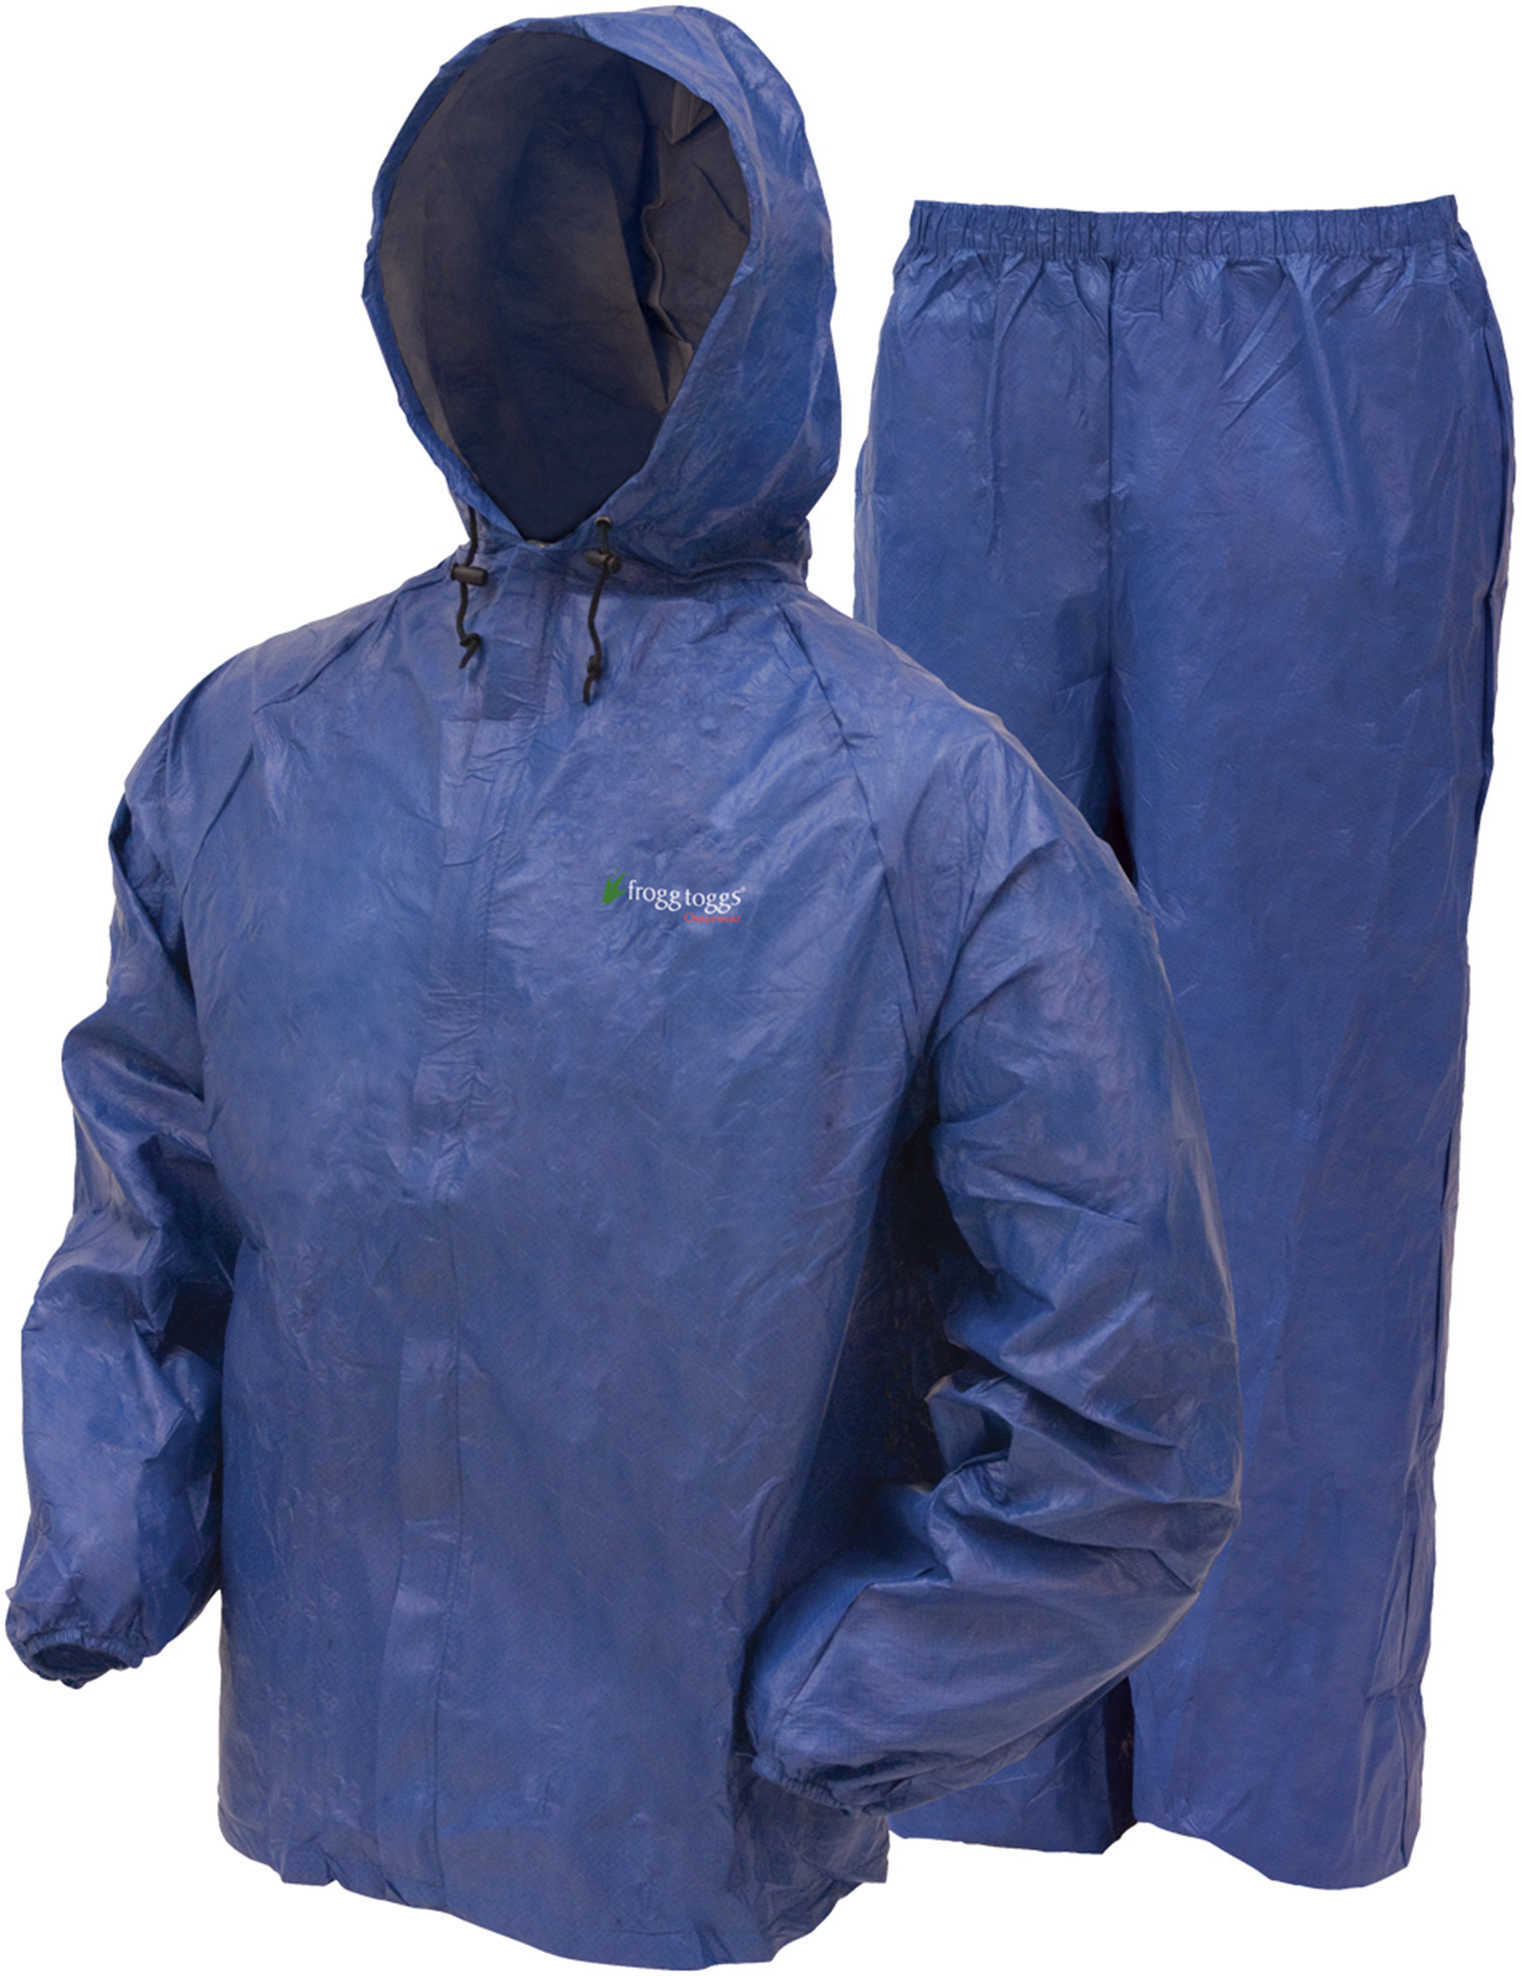 Frogg Toggs Ultra-Lite2 Rain Suit w/Stuff Sack Large, Royal Blue UL12104-12LG